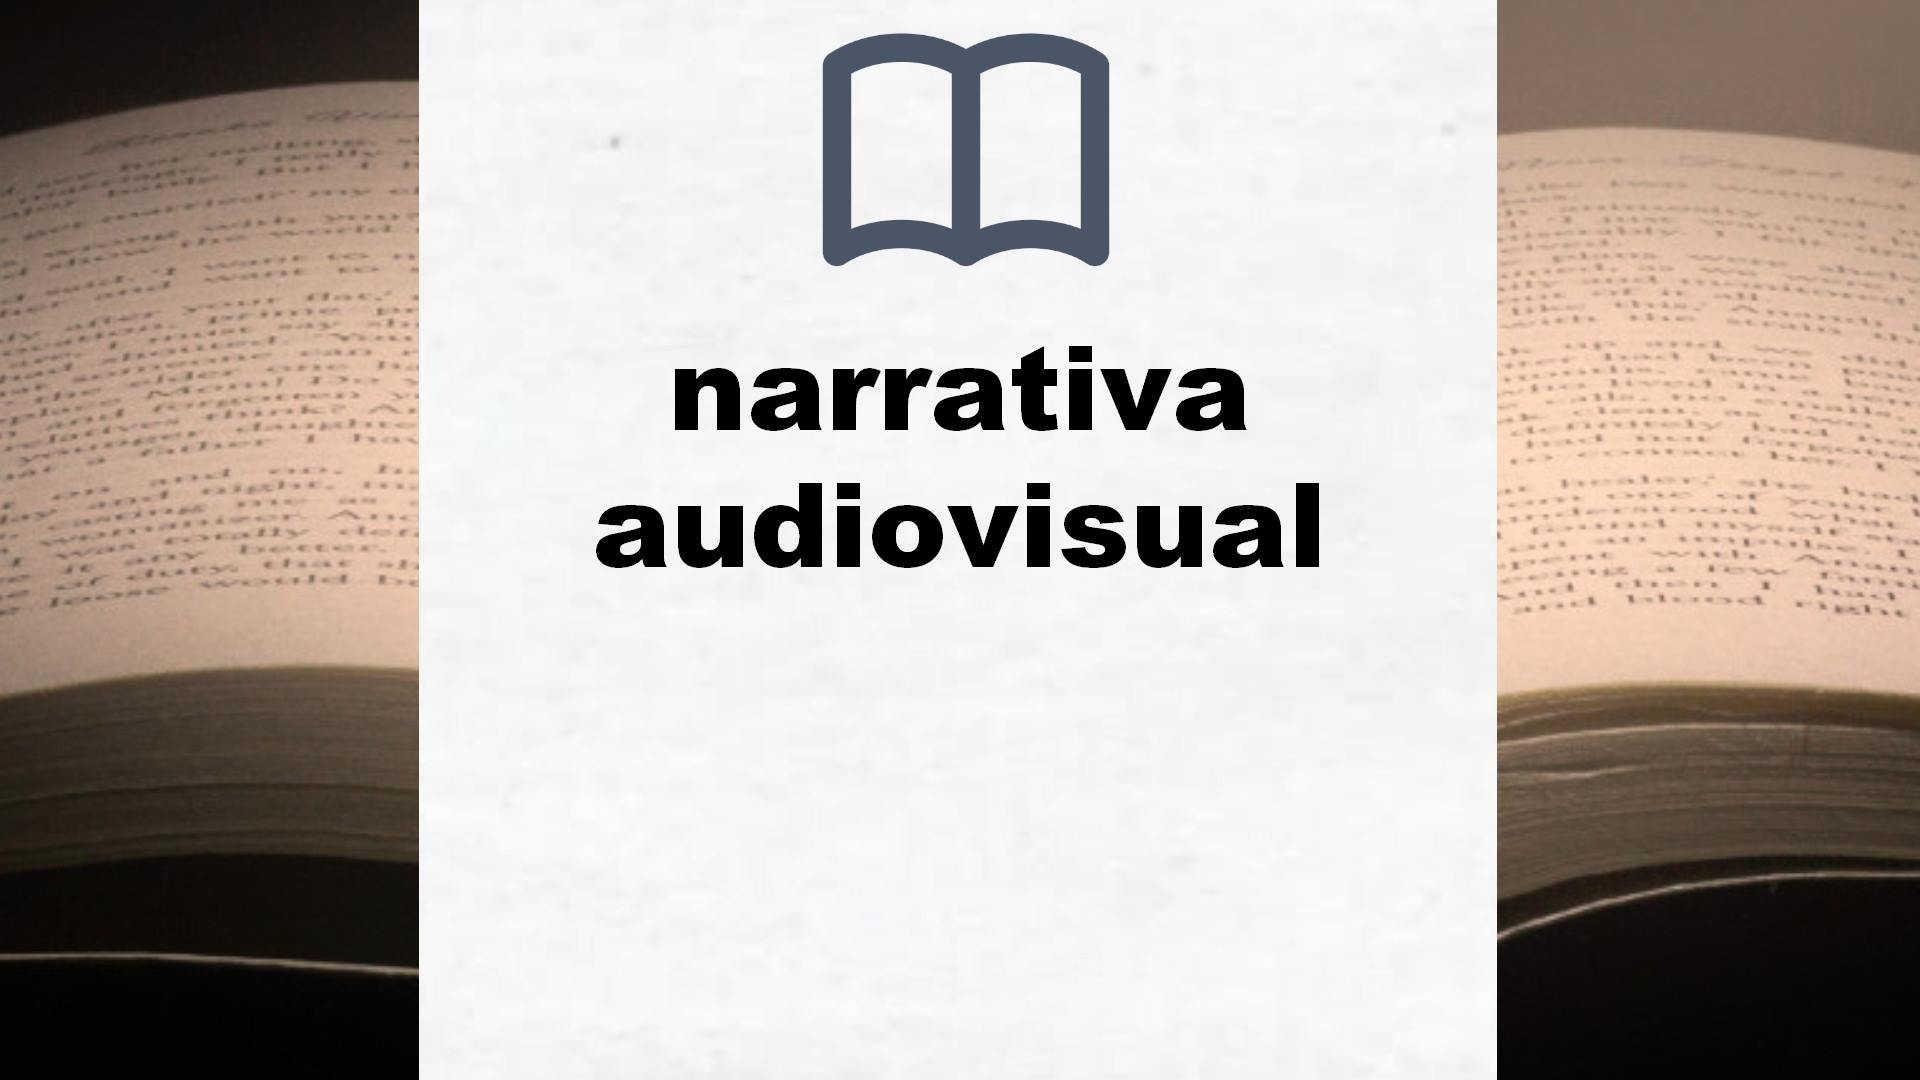 Libros sobre narrativa audiovisual